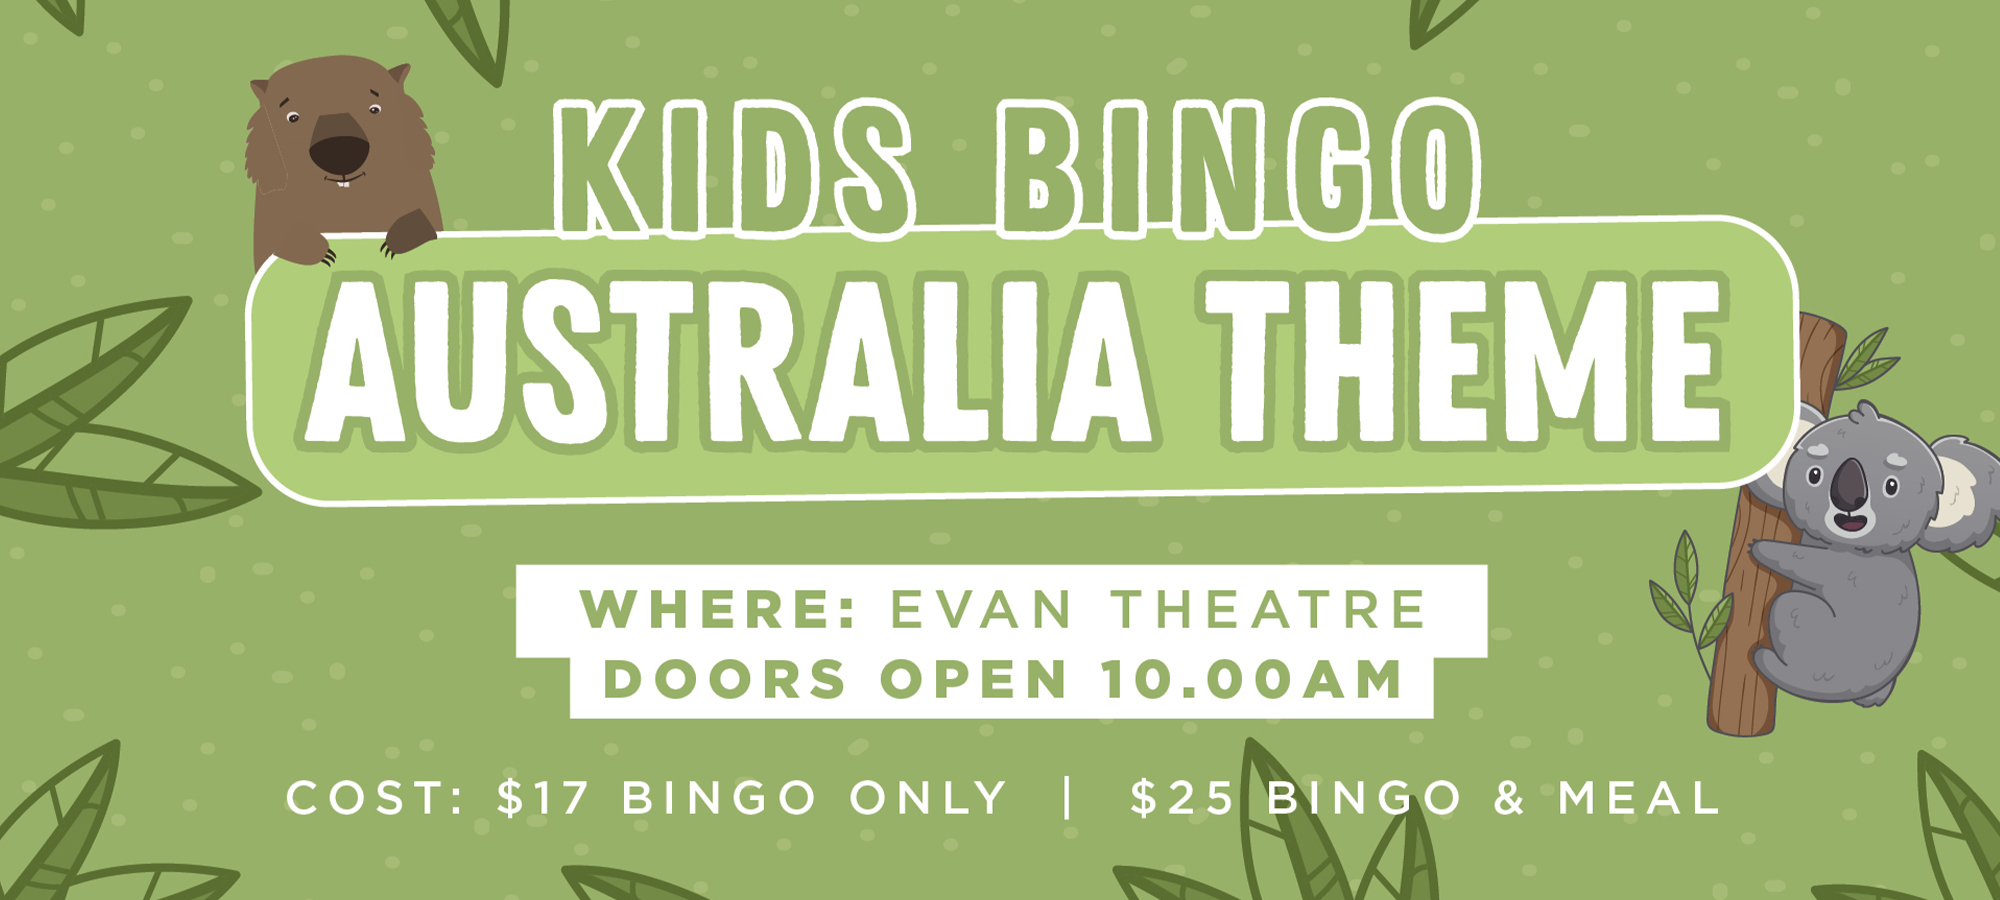 Kids Bingo: Australia Theme